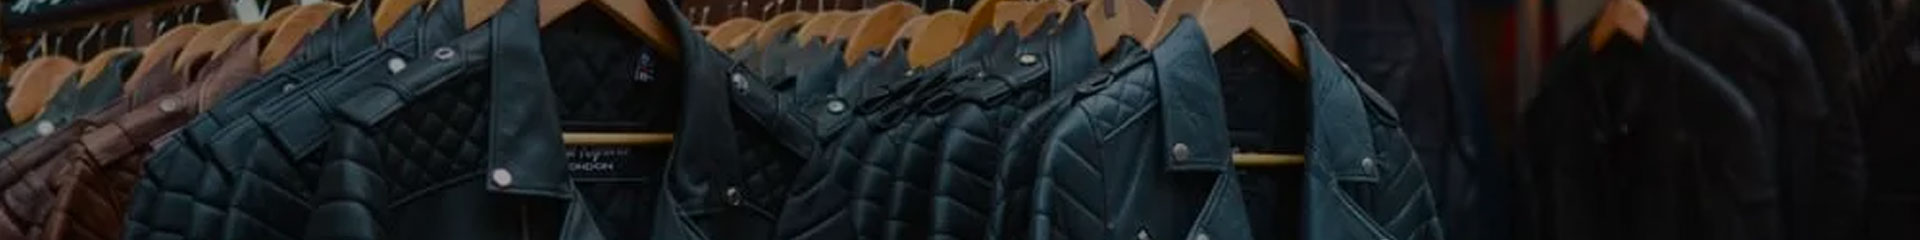 leather jacket factory